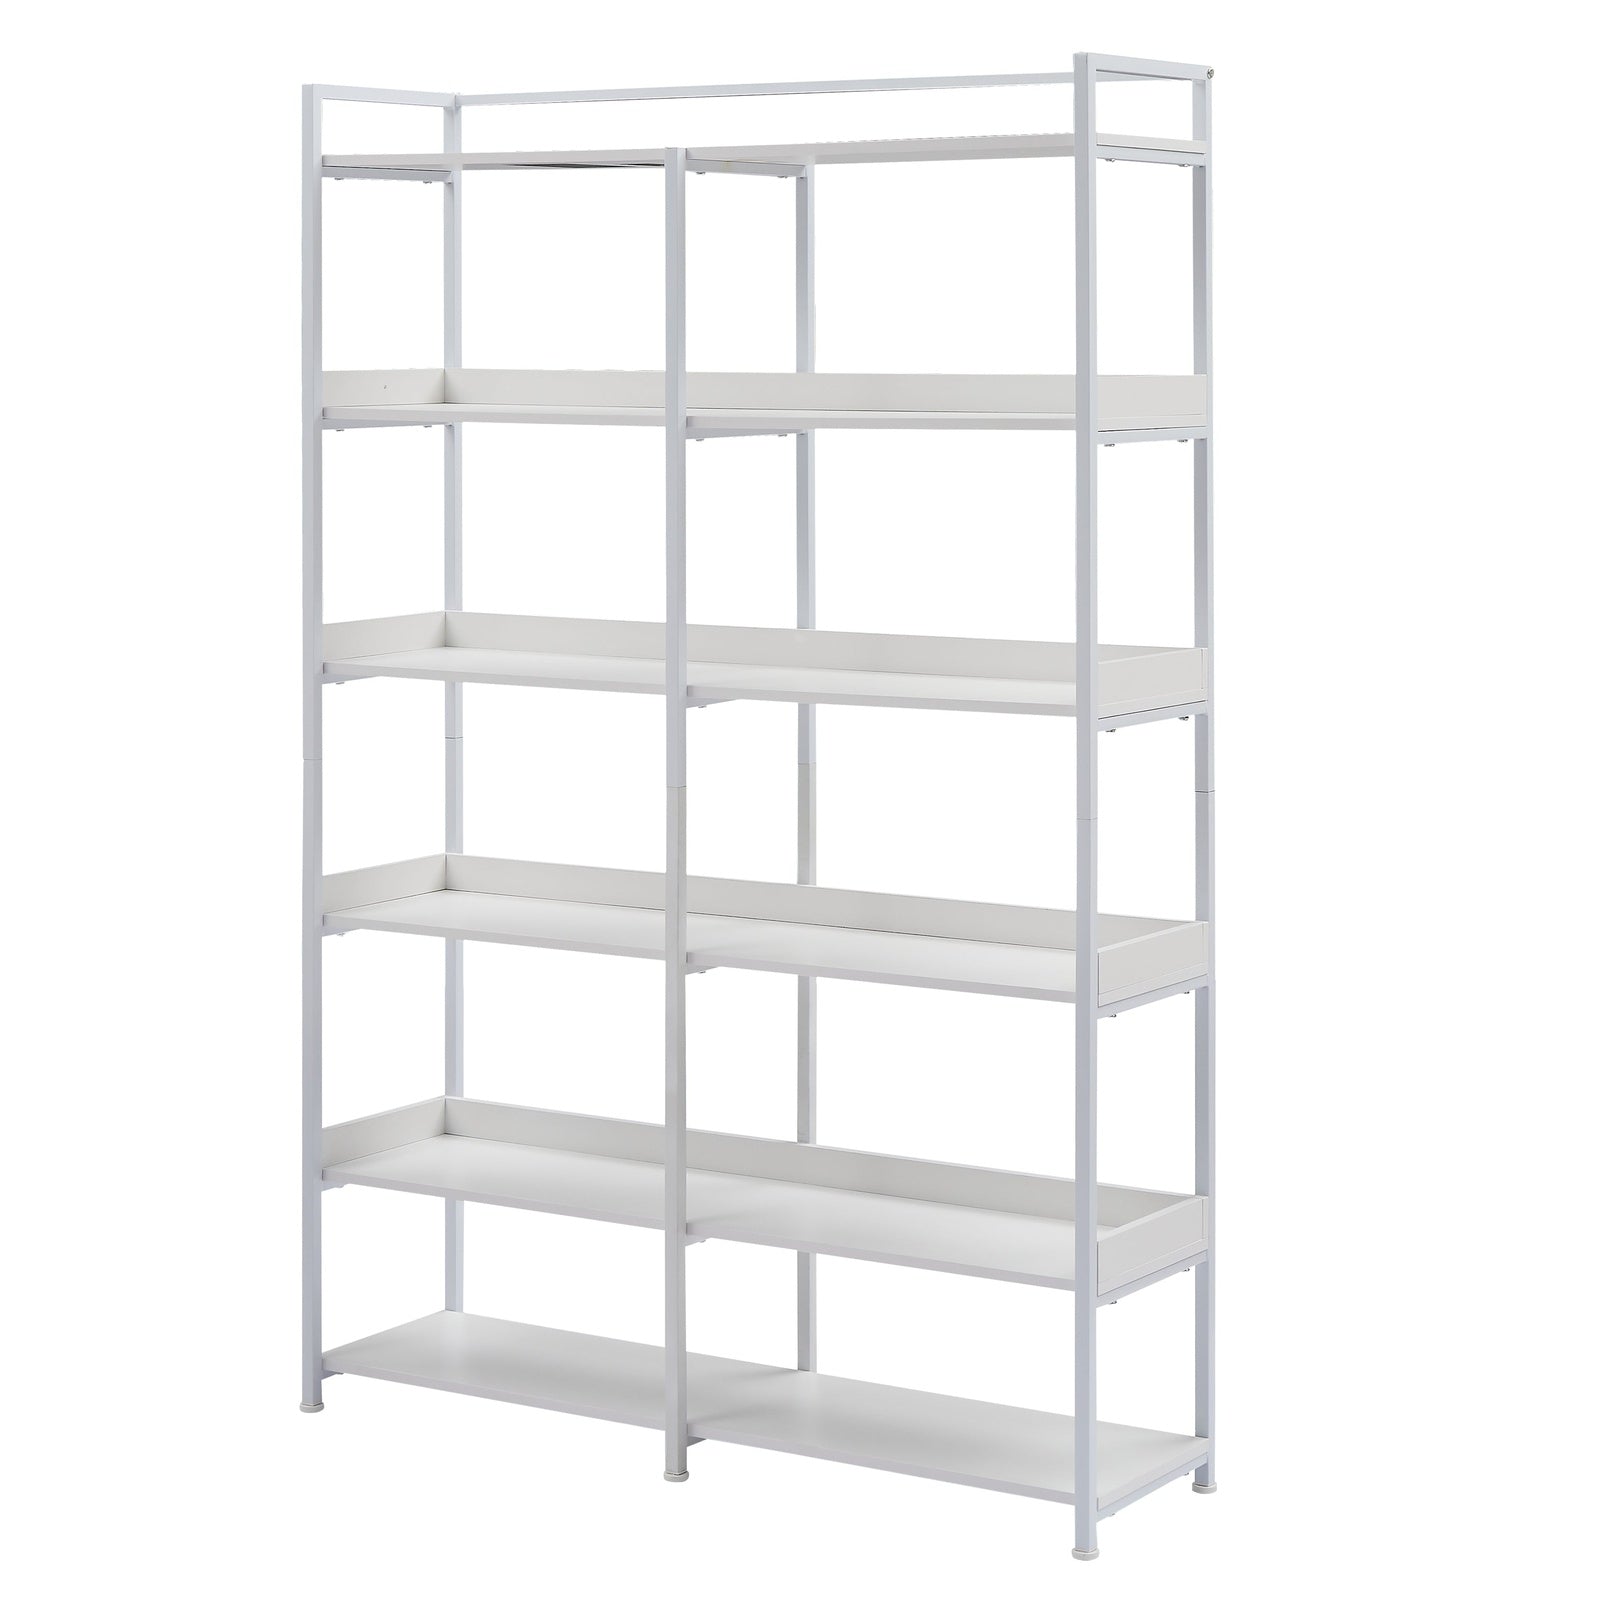 allen 6 tier bookshelf with back and side panel adjustable foot padsstorage cabinets 281554